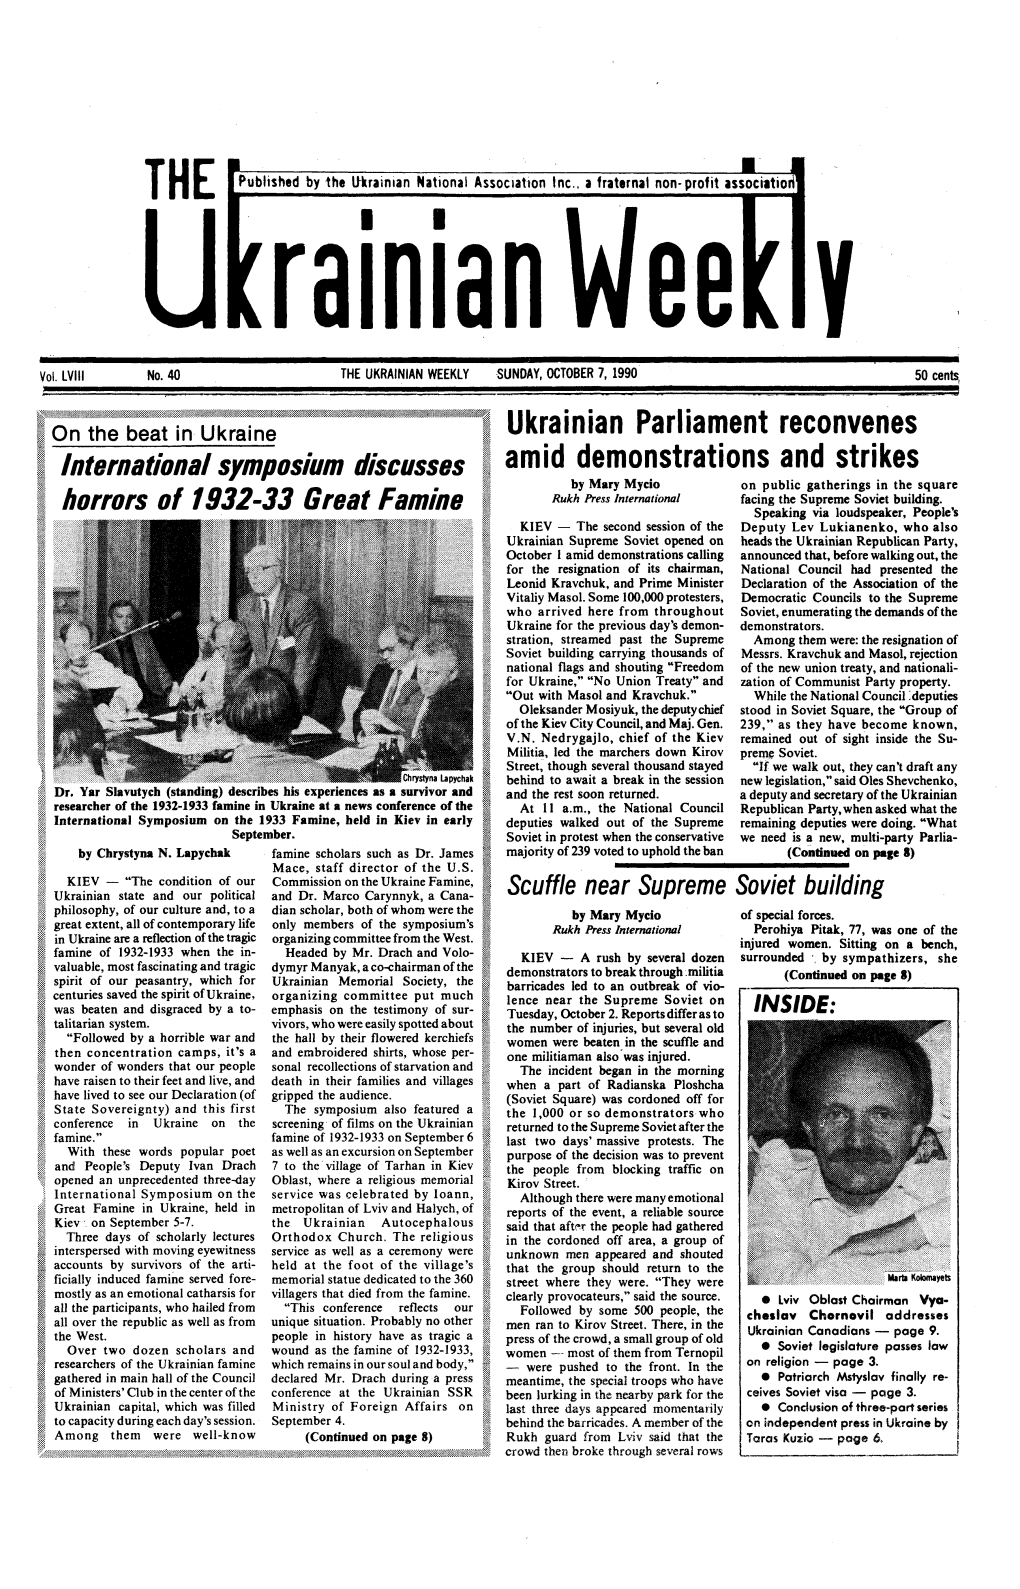 The Ukrainian Weekly 1990, No.40